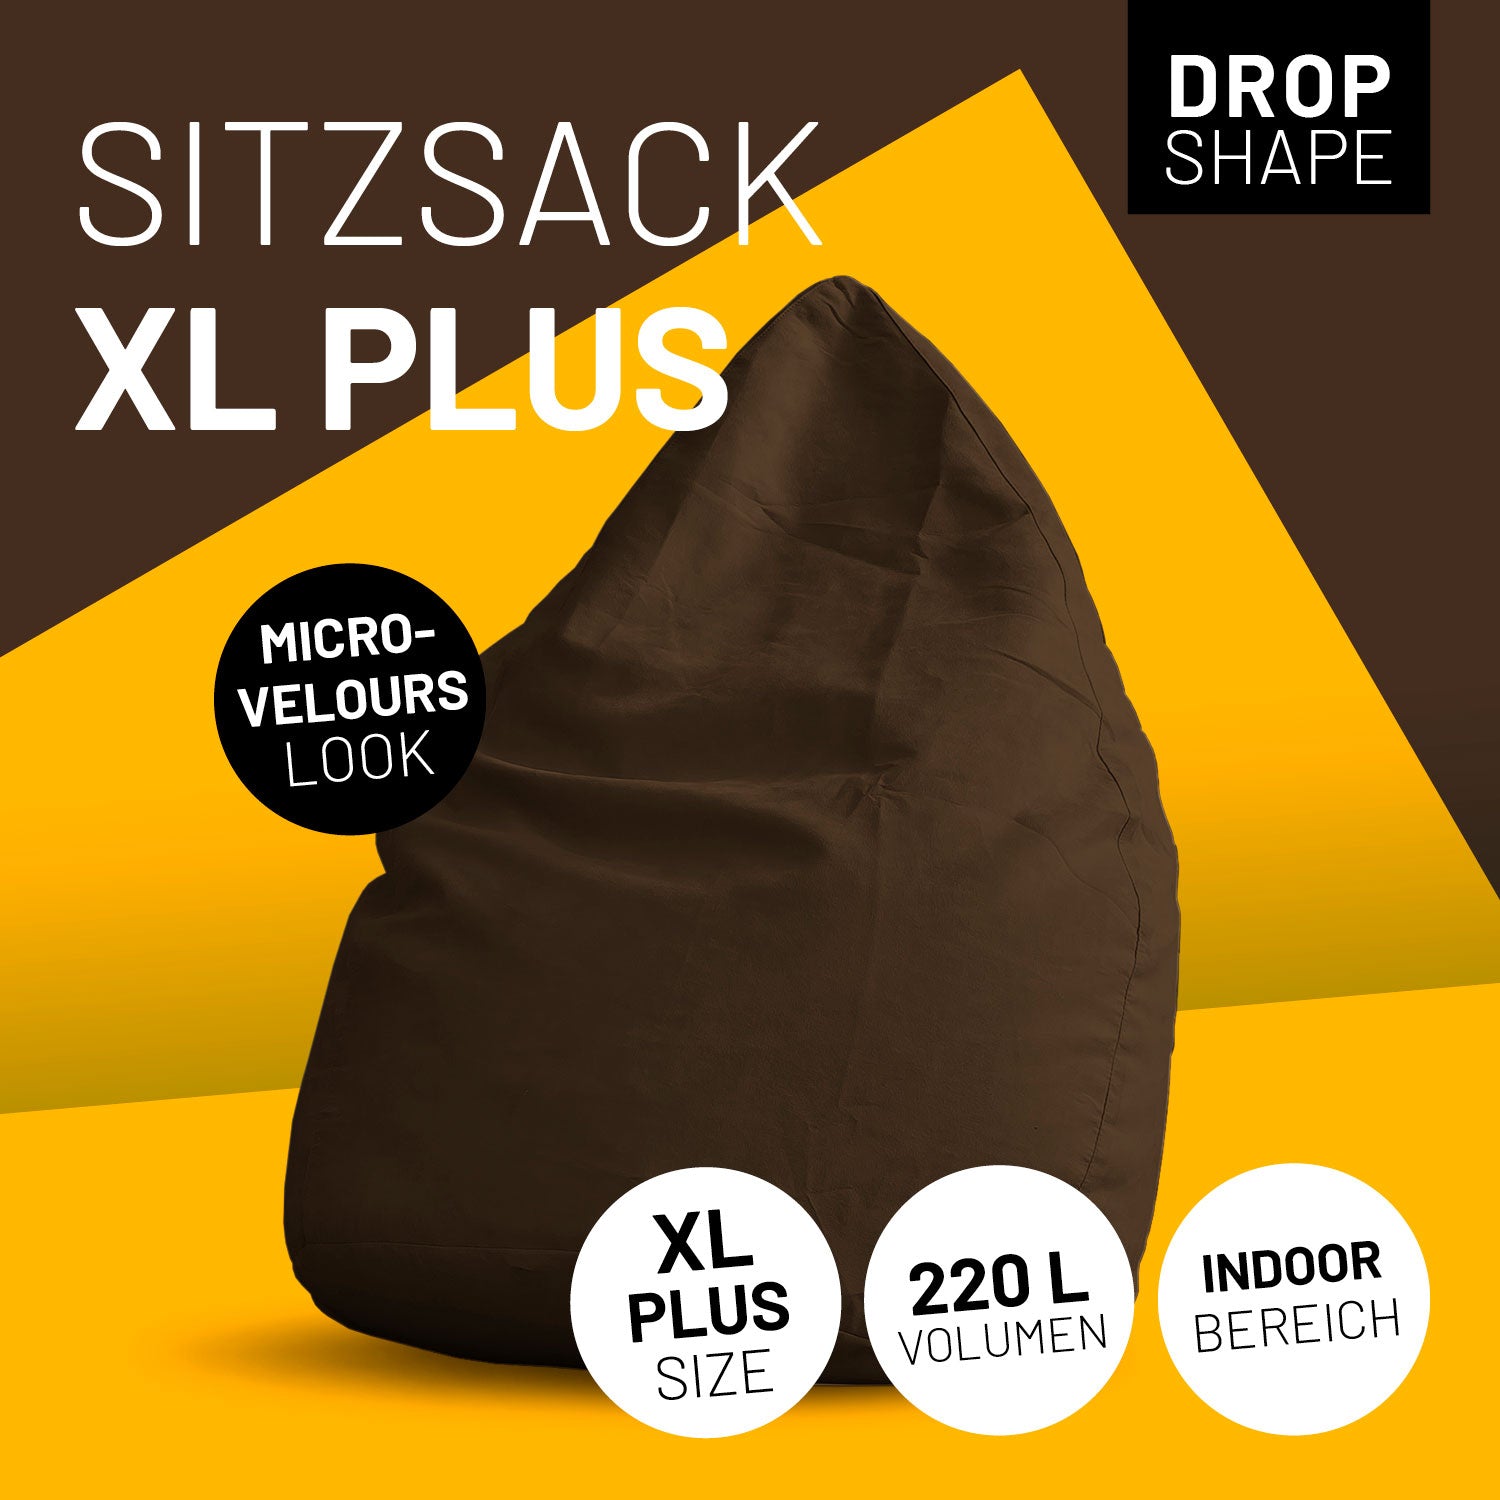 Luxury XL PLUS Sitzsack (220 L) - indoor - Braun